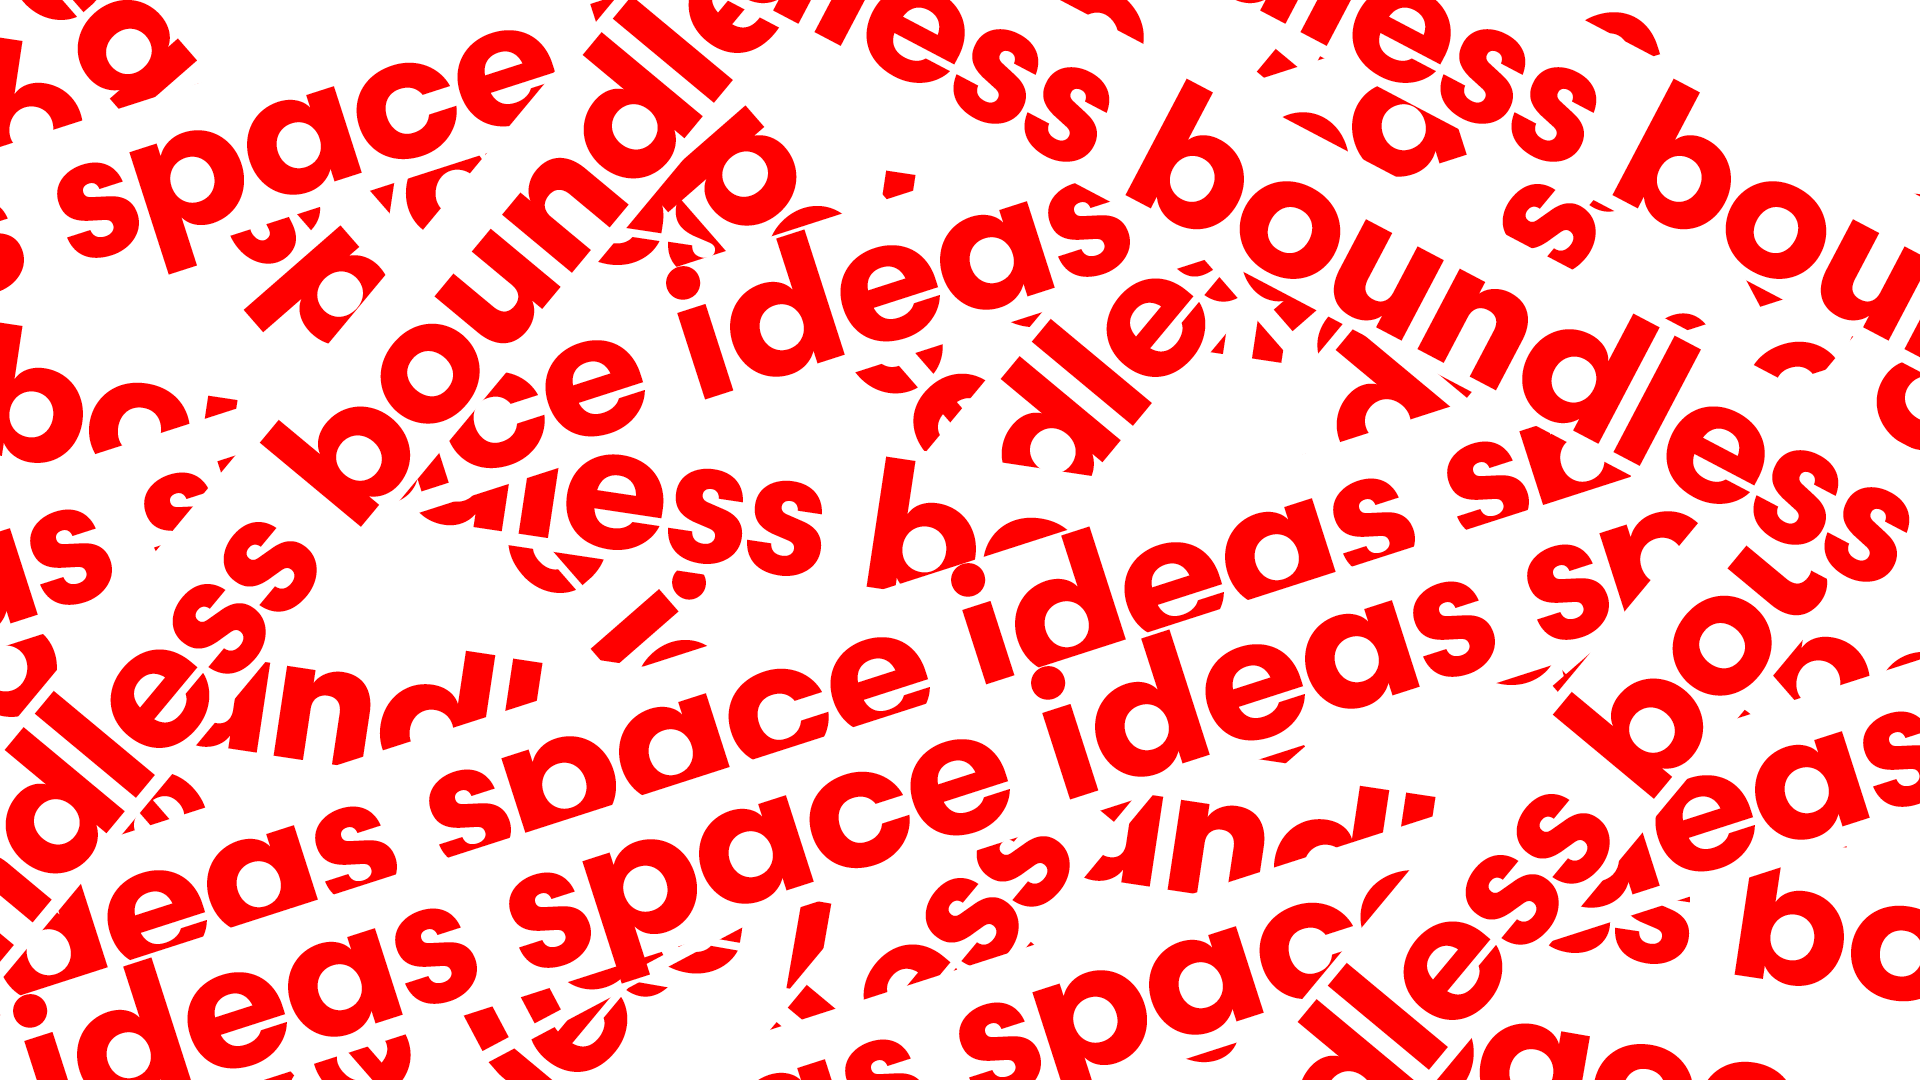 Boundless Ideas Space Artwork